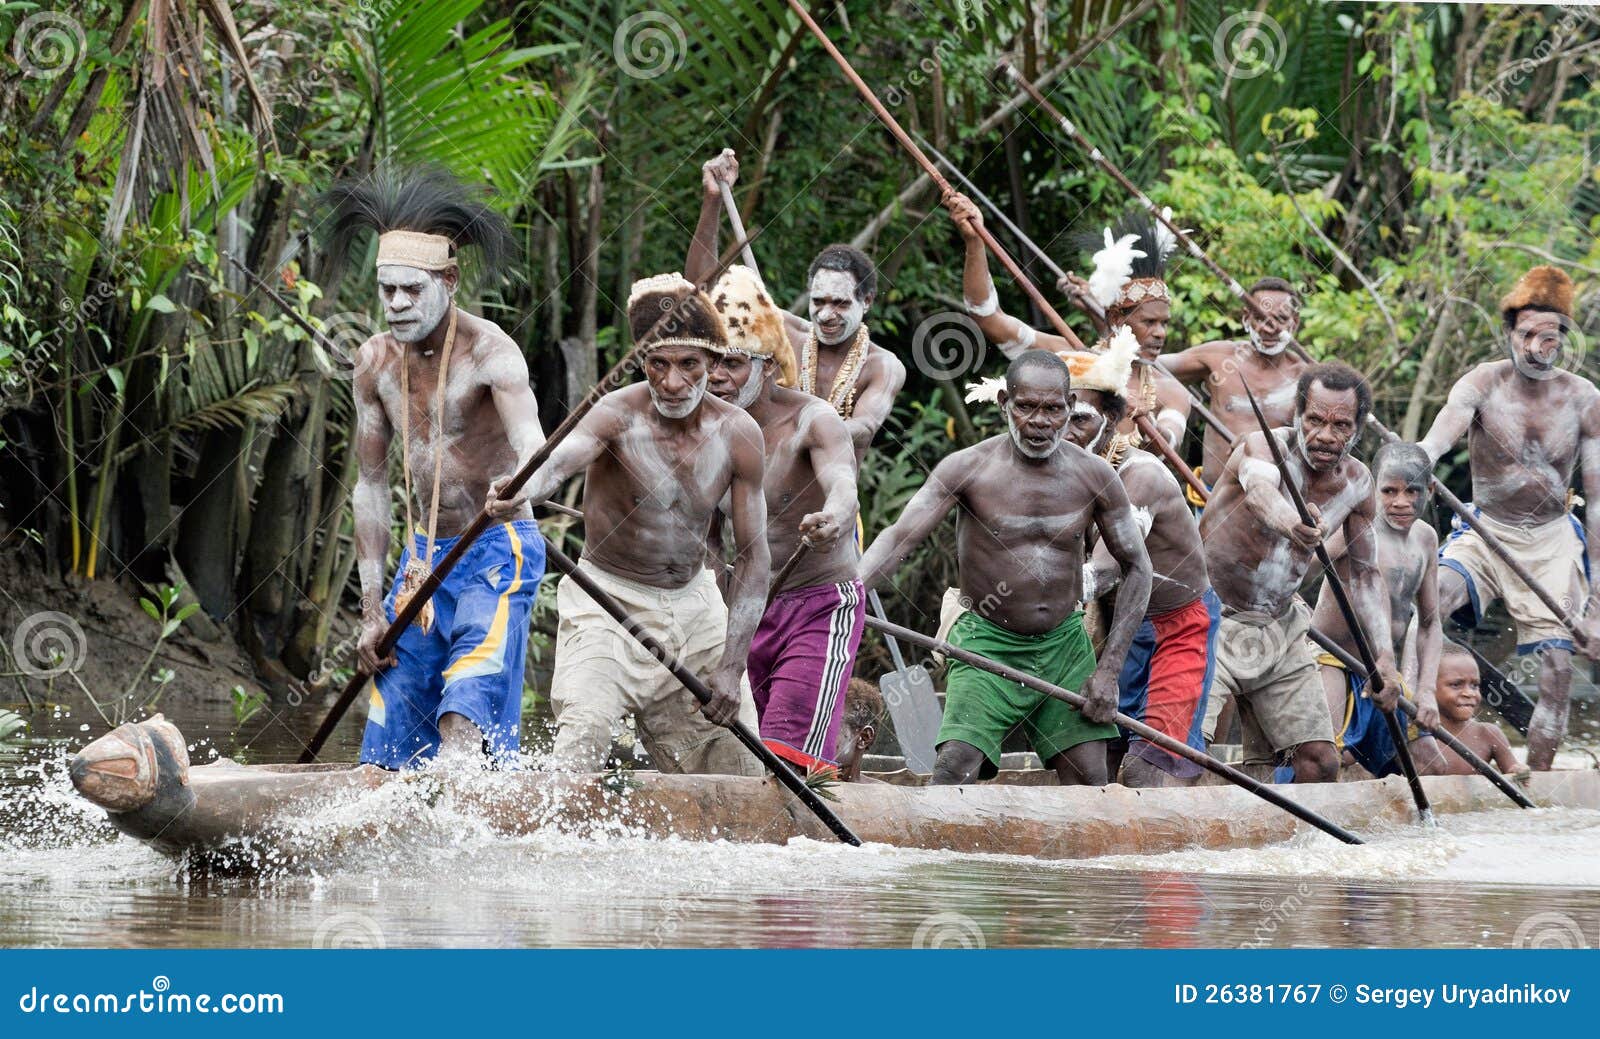 asmat men paddling in their dugout canoe editorial